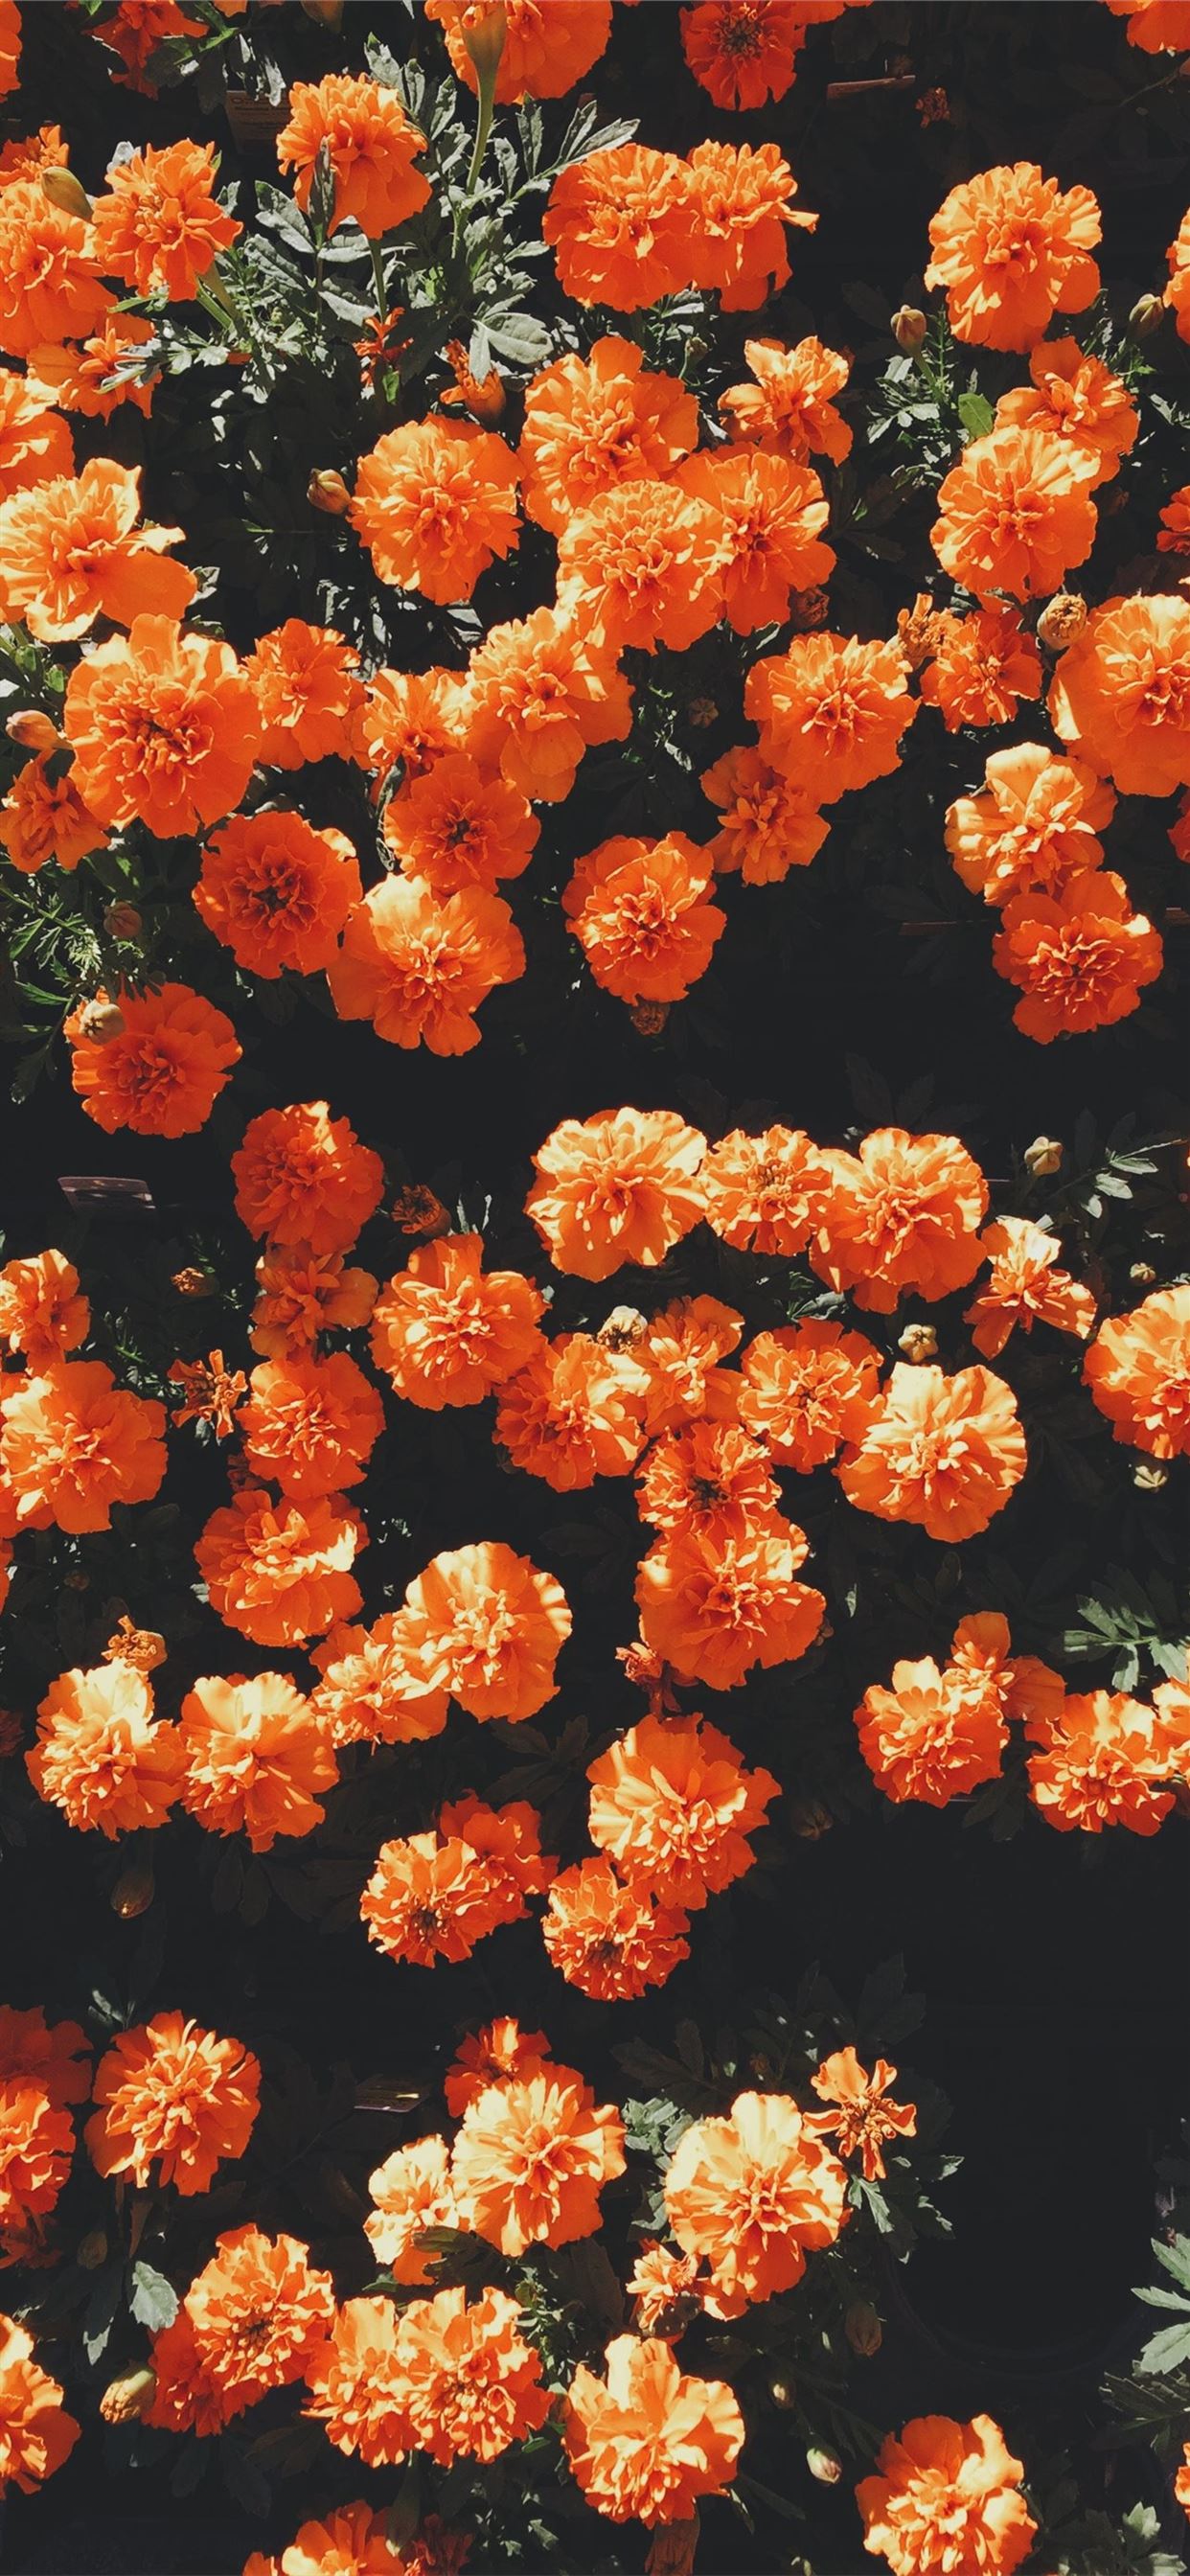 blooming orange petaled flowers at daytime iPhone 11 Wallpaper Free Download